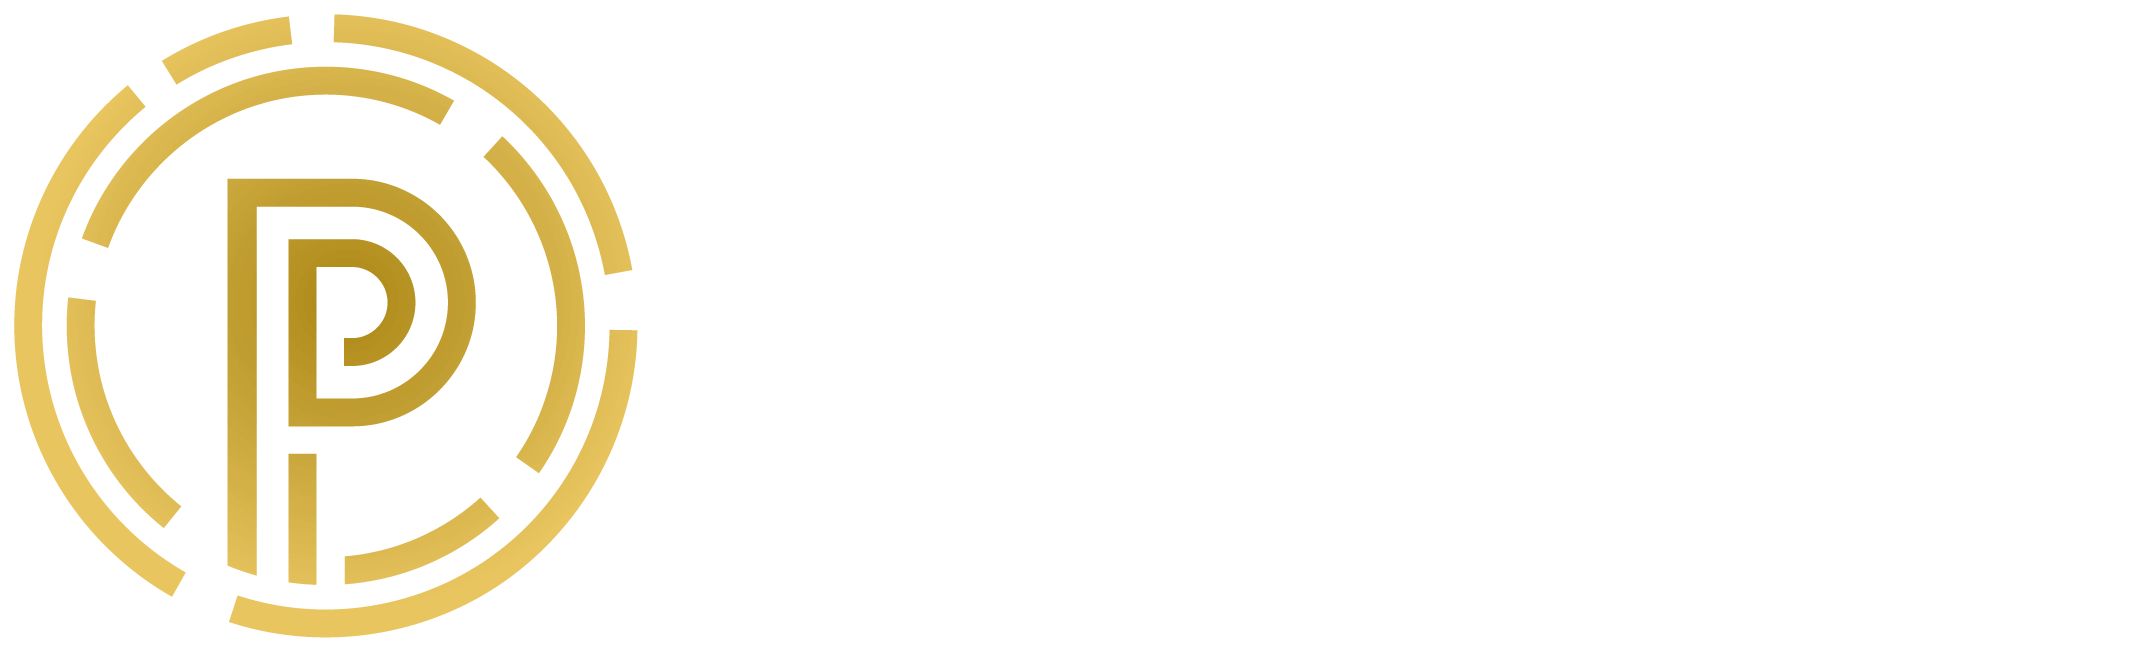 Pronea Partners Club